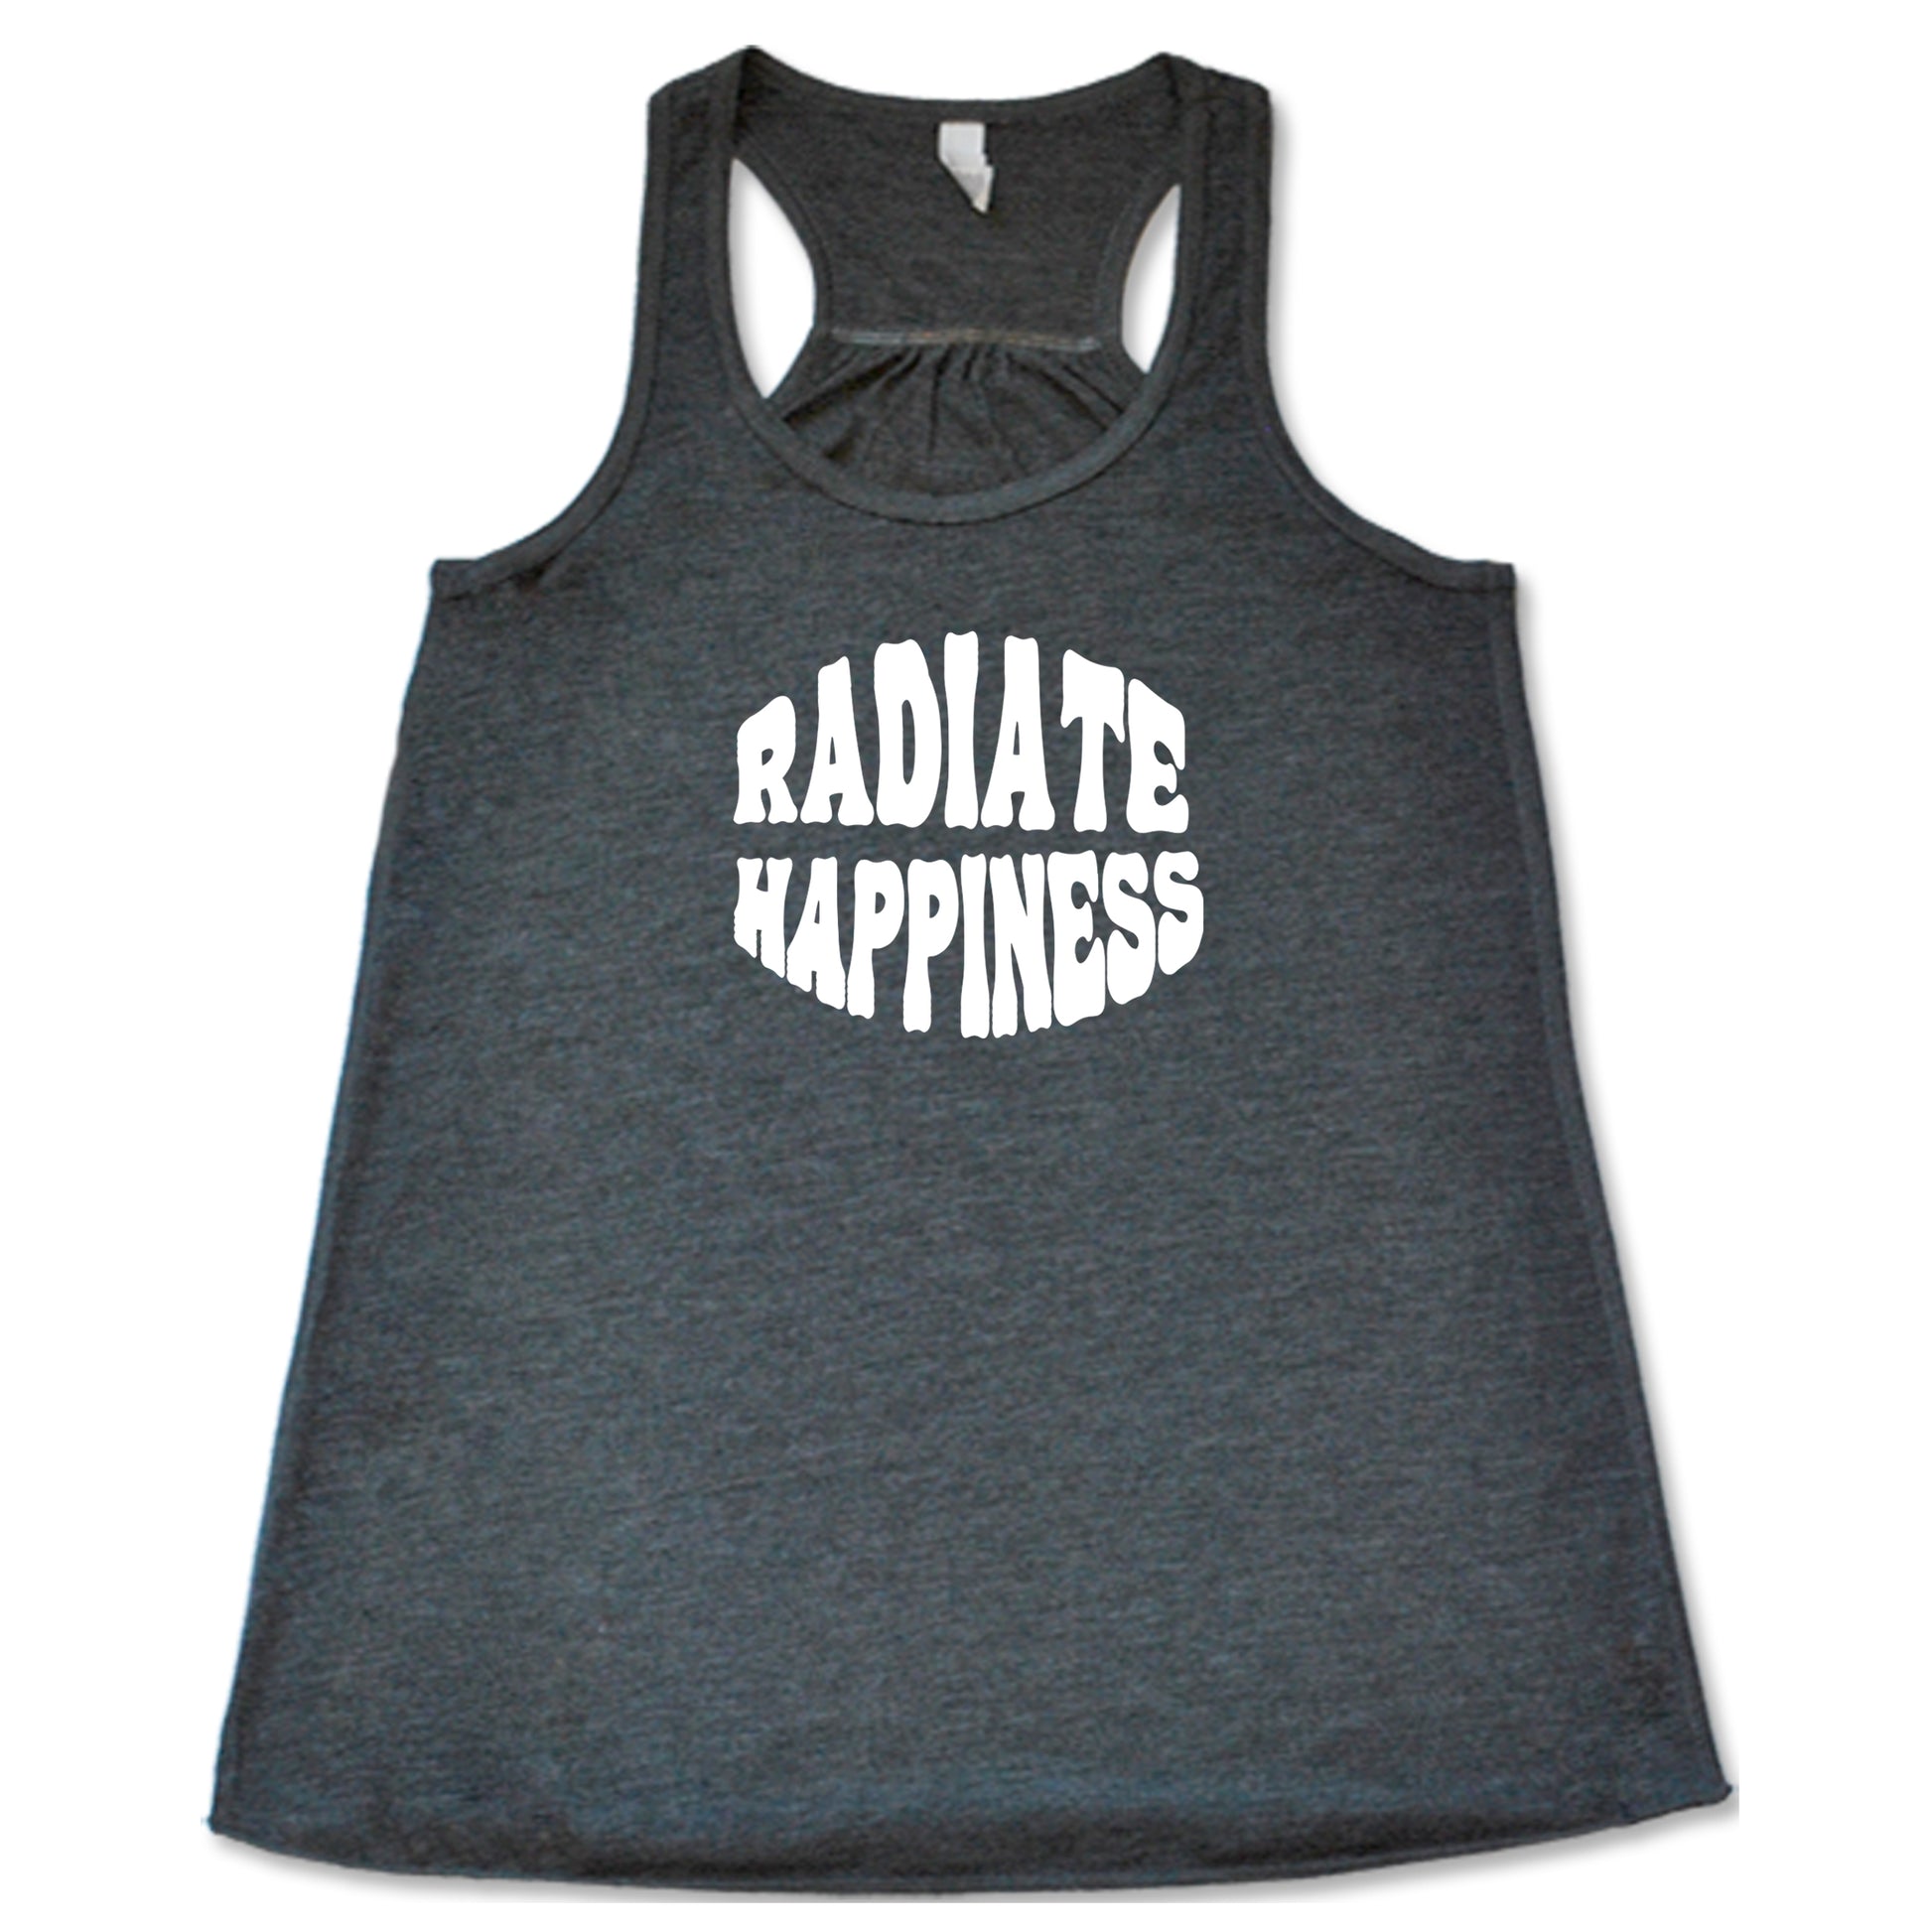 radiate happiness grey racerback shirt